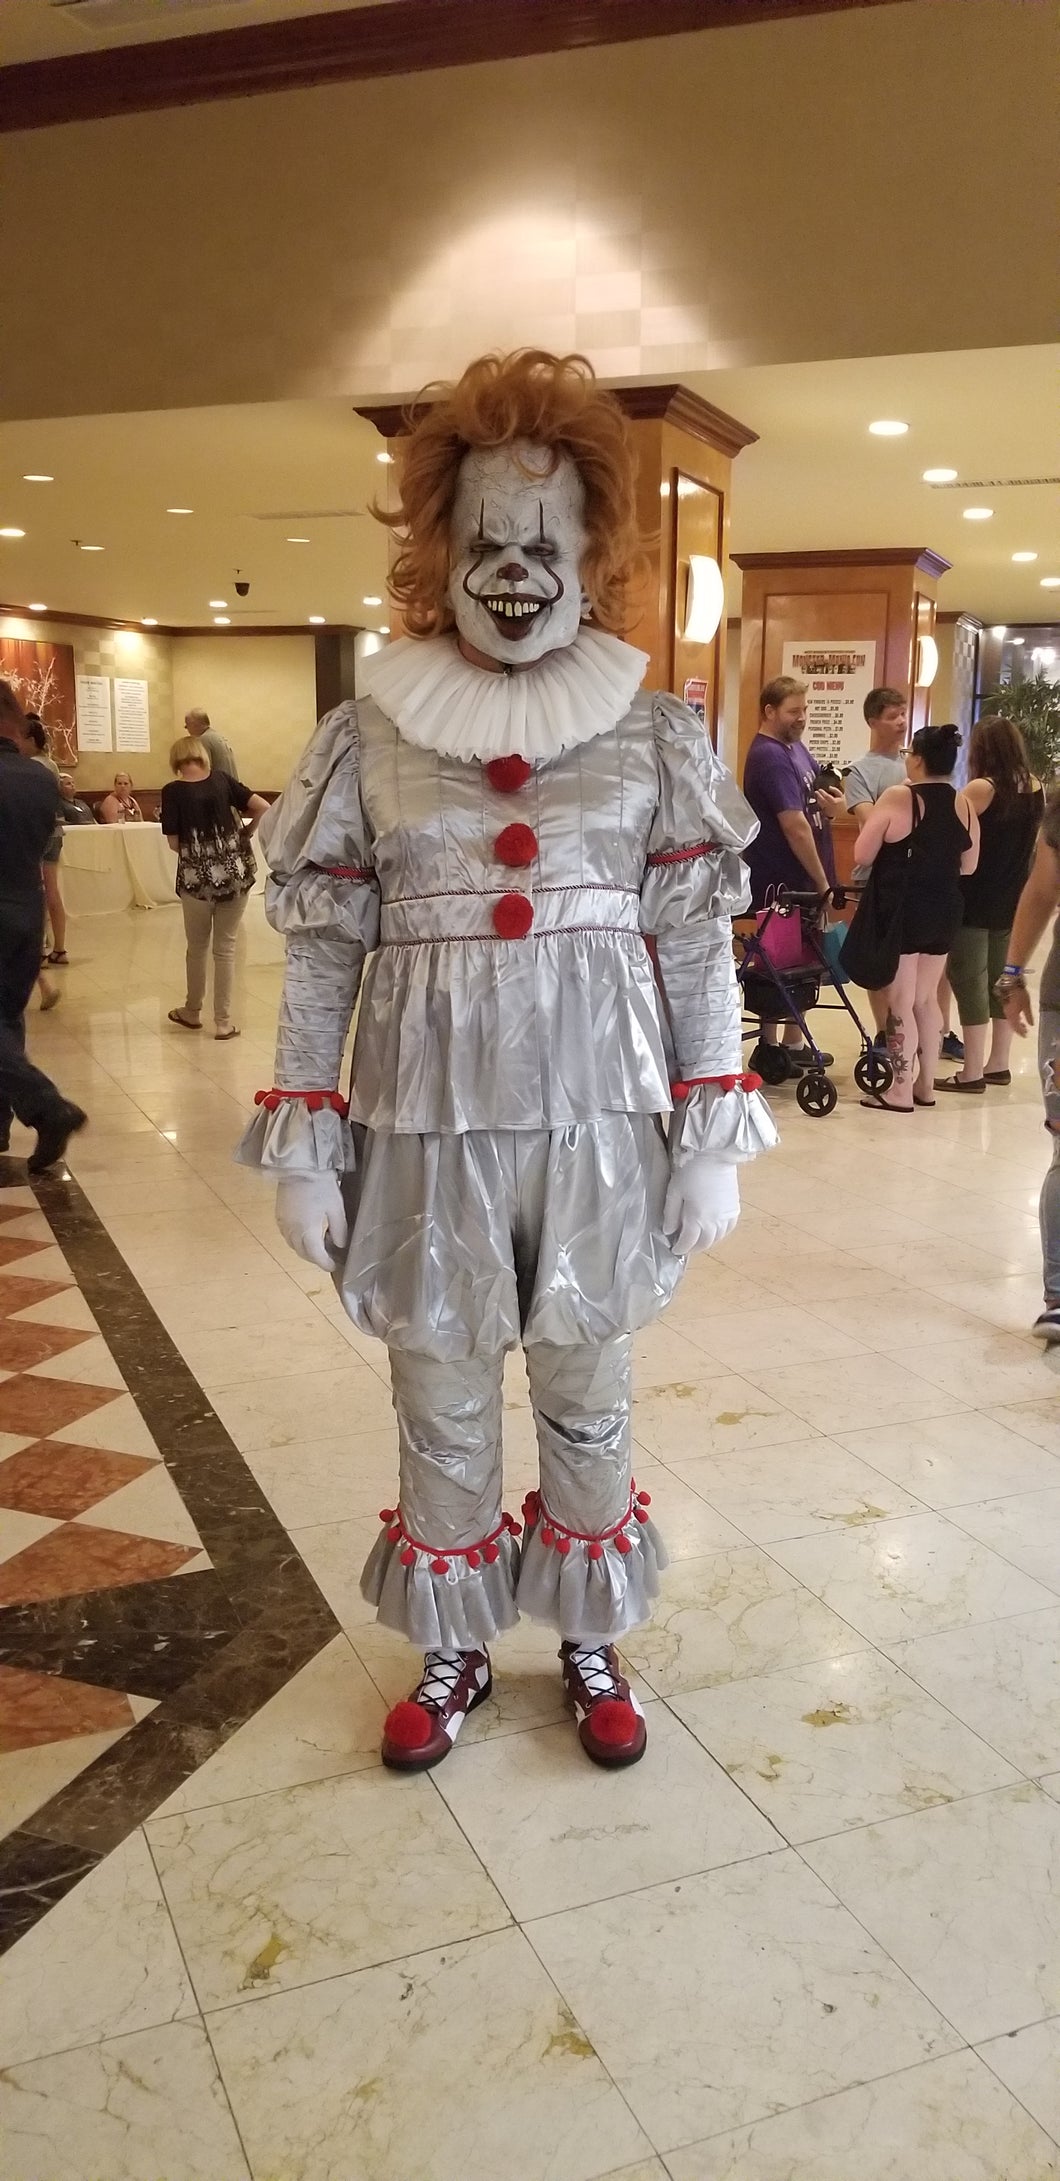 Scary Halloween Clown